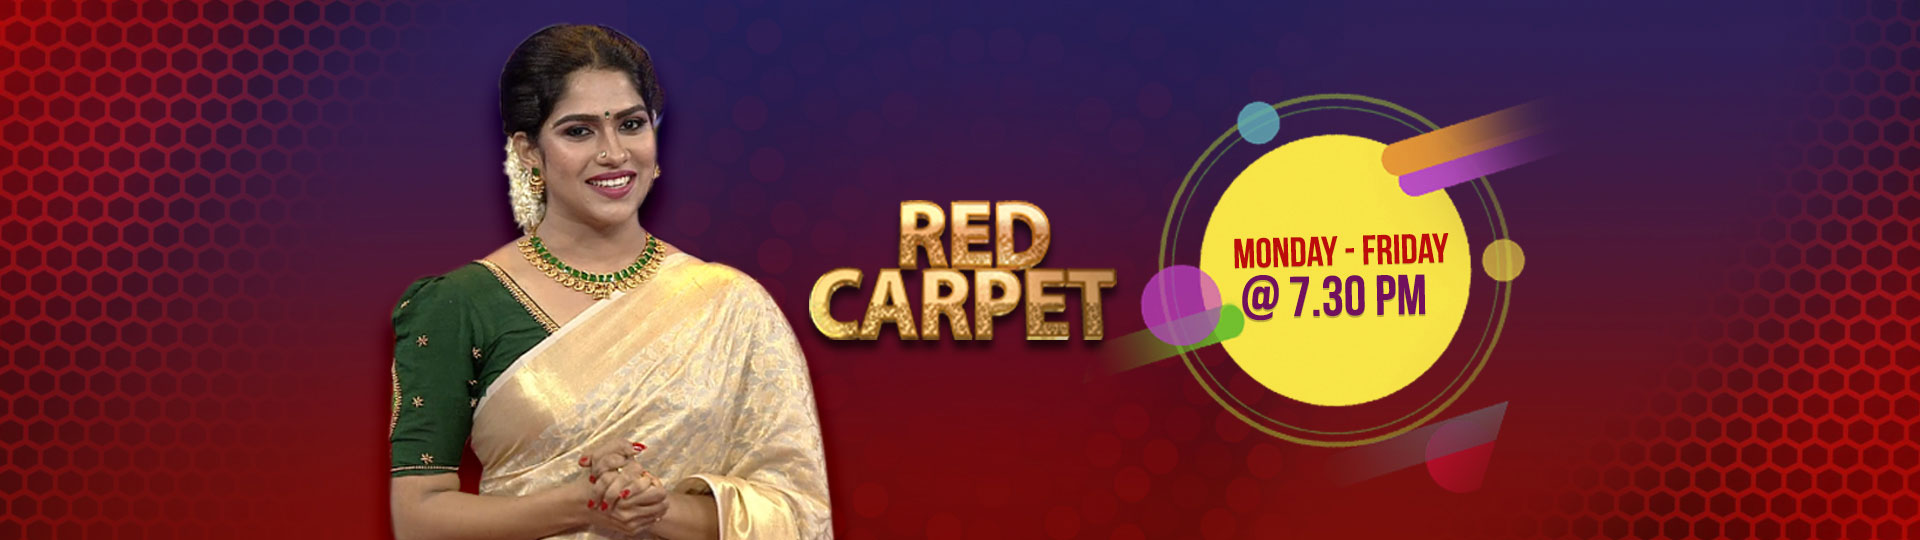 Red Carpet - Banner